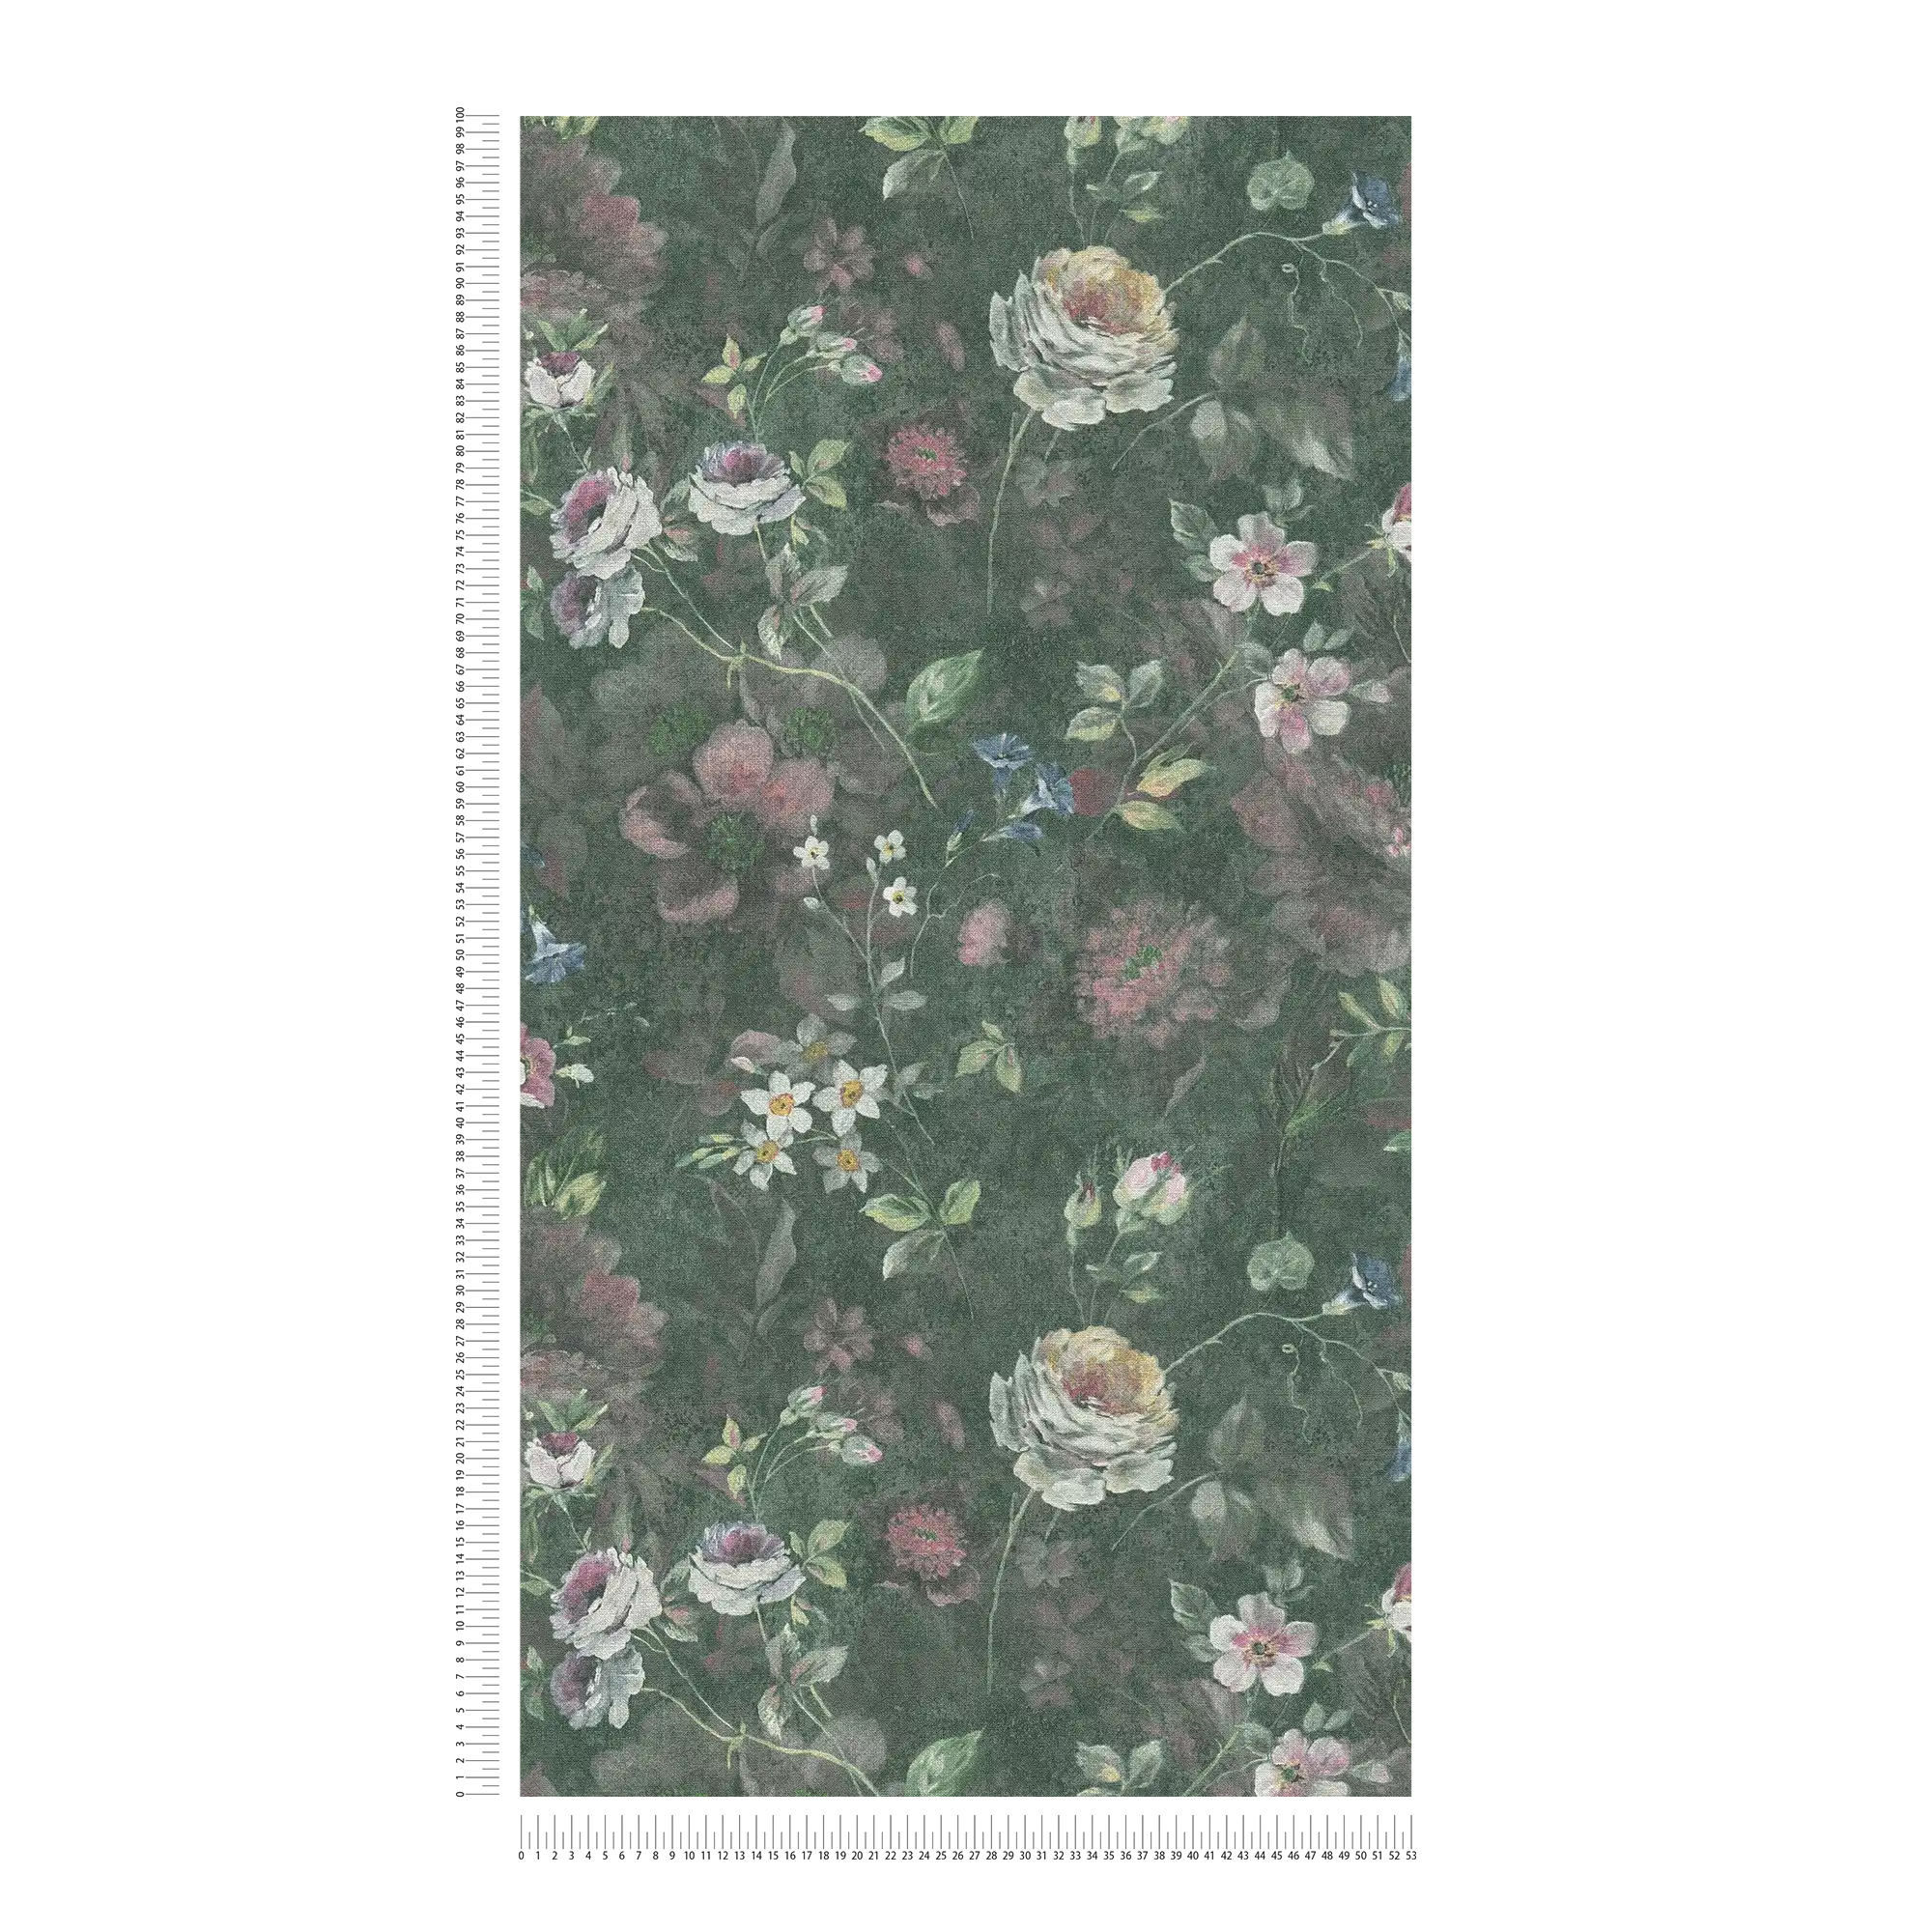             Carta da parati in tessuto non tessuto con motivo floreale dipinto senza PVC - verde, bianco, rosa
        